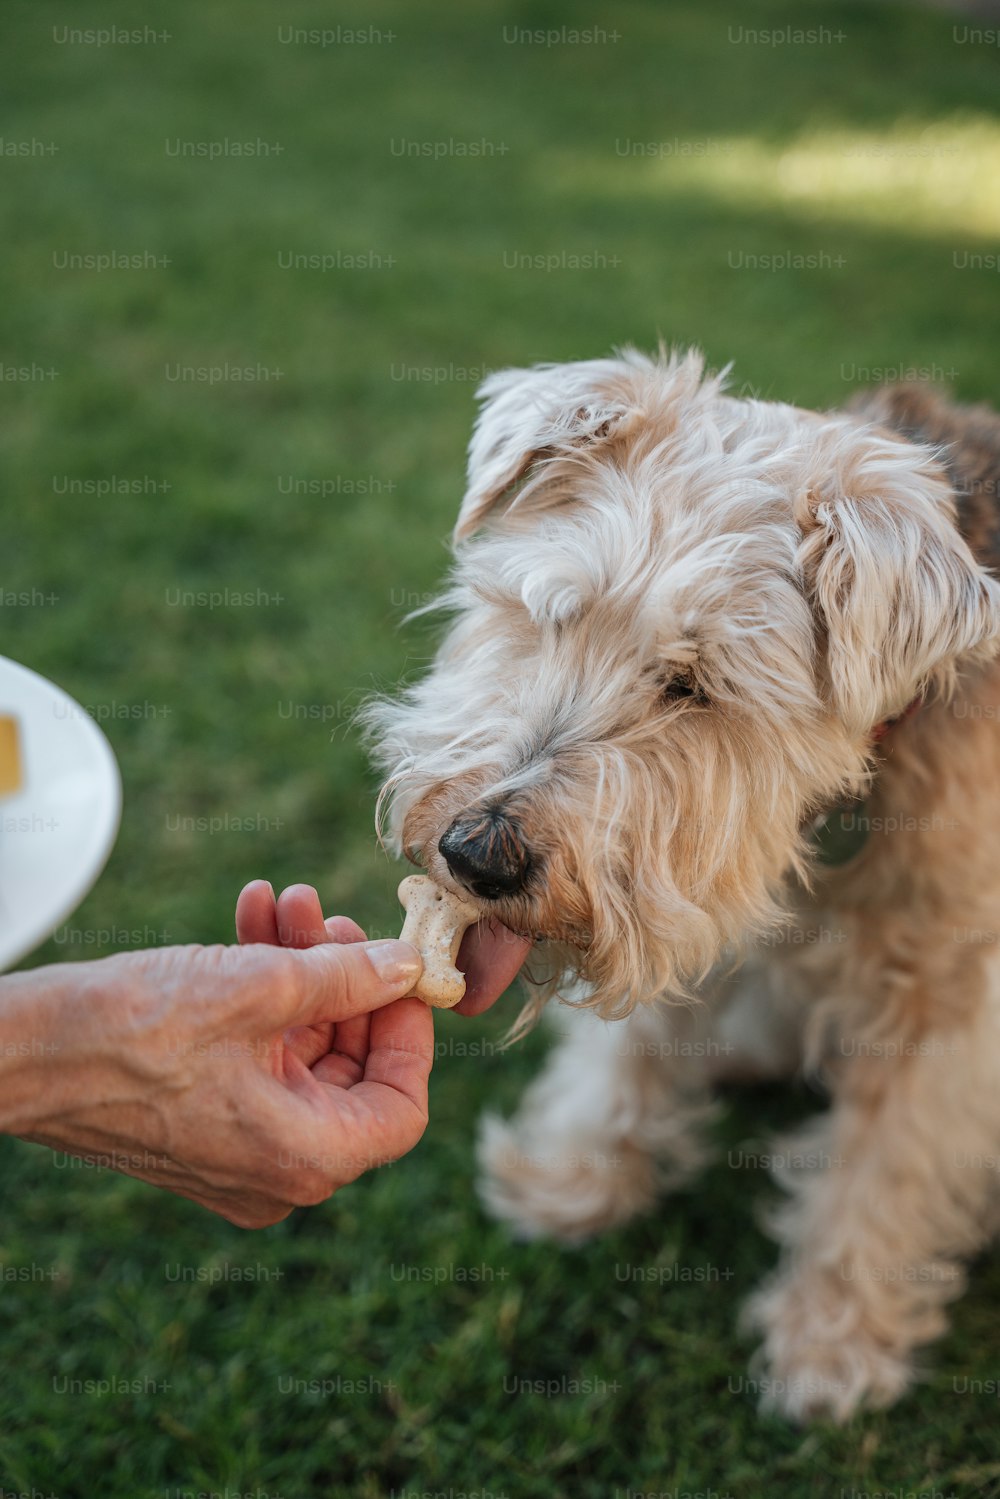 Una persona alimentando a un perro con un pedazo de comida